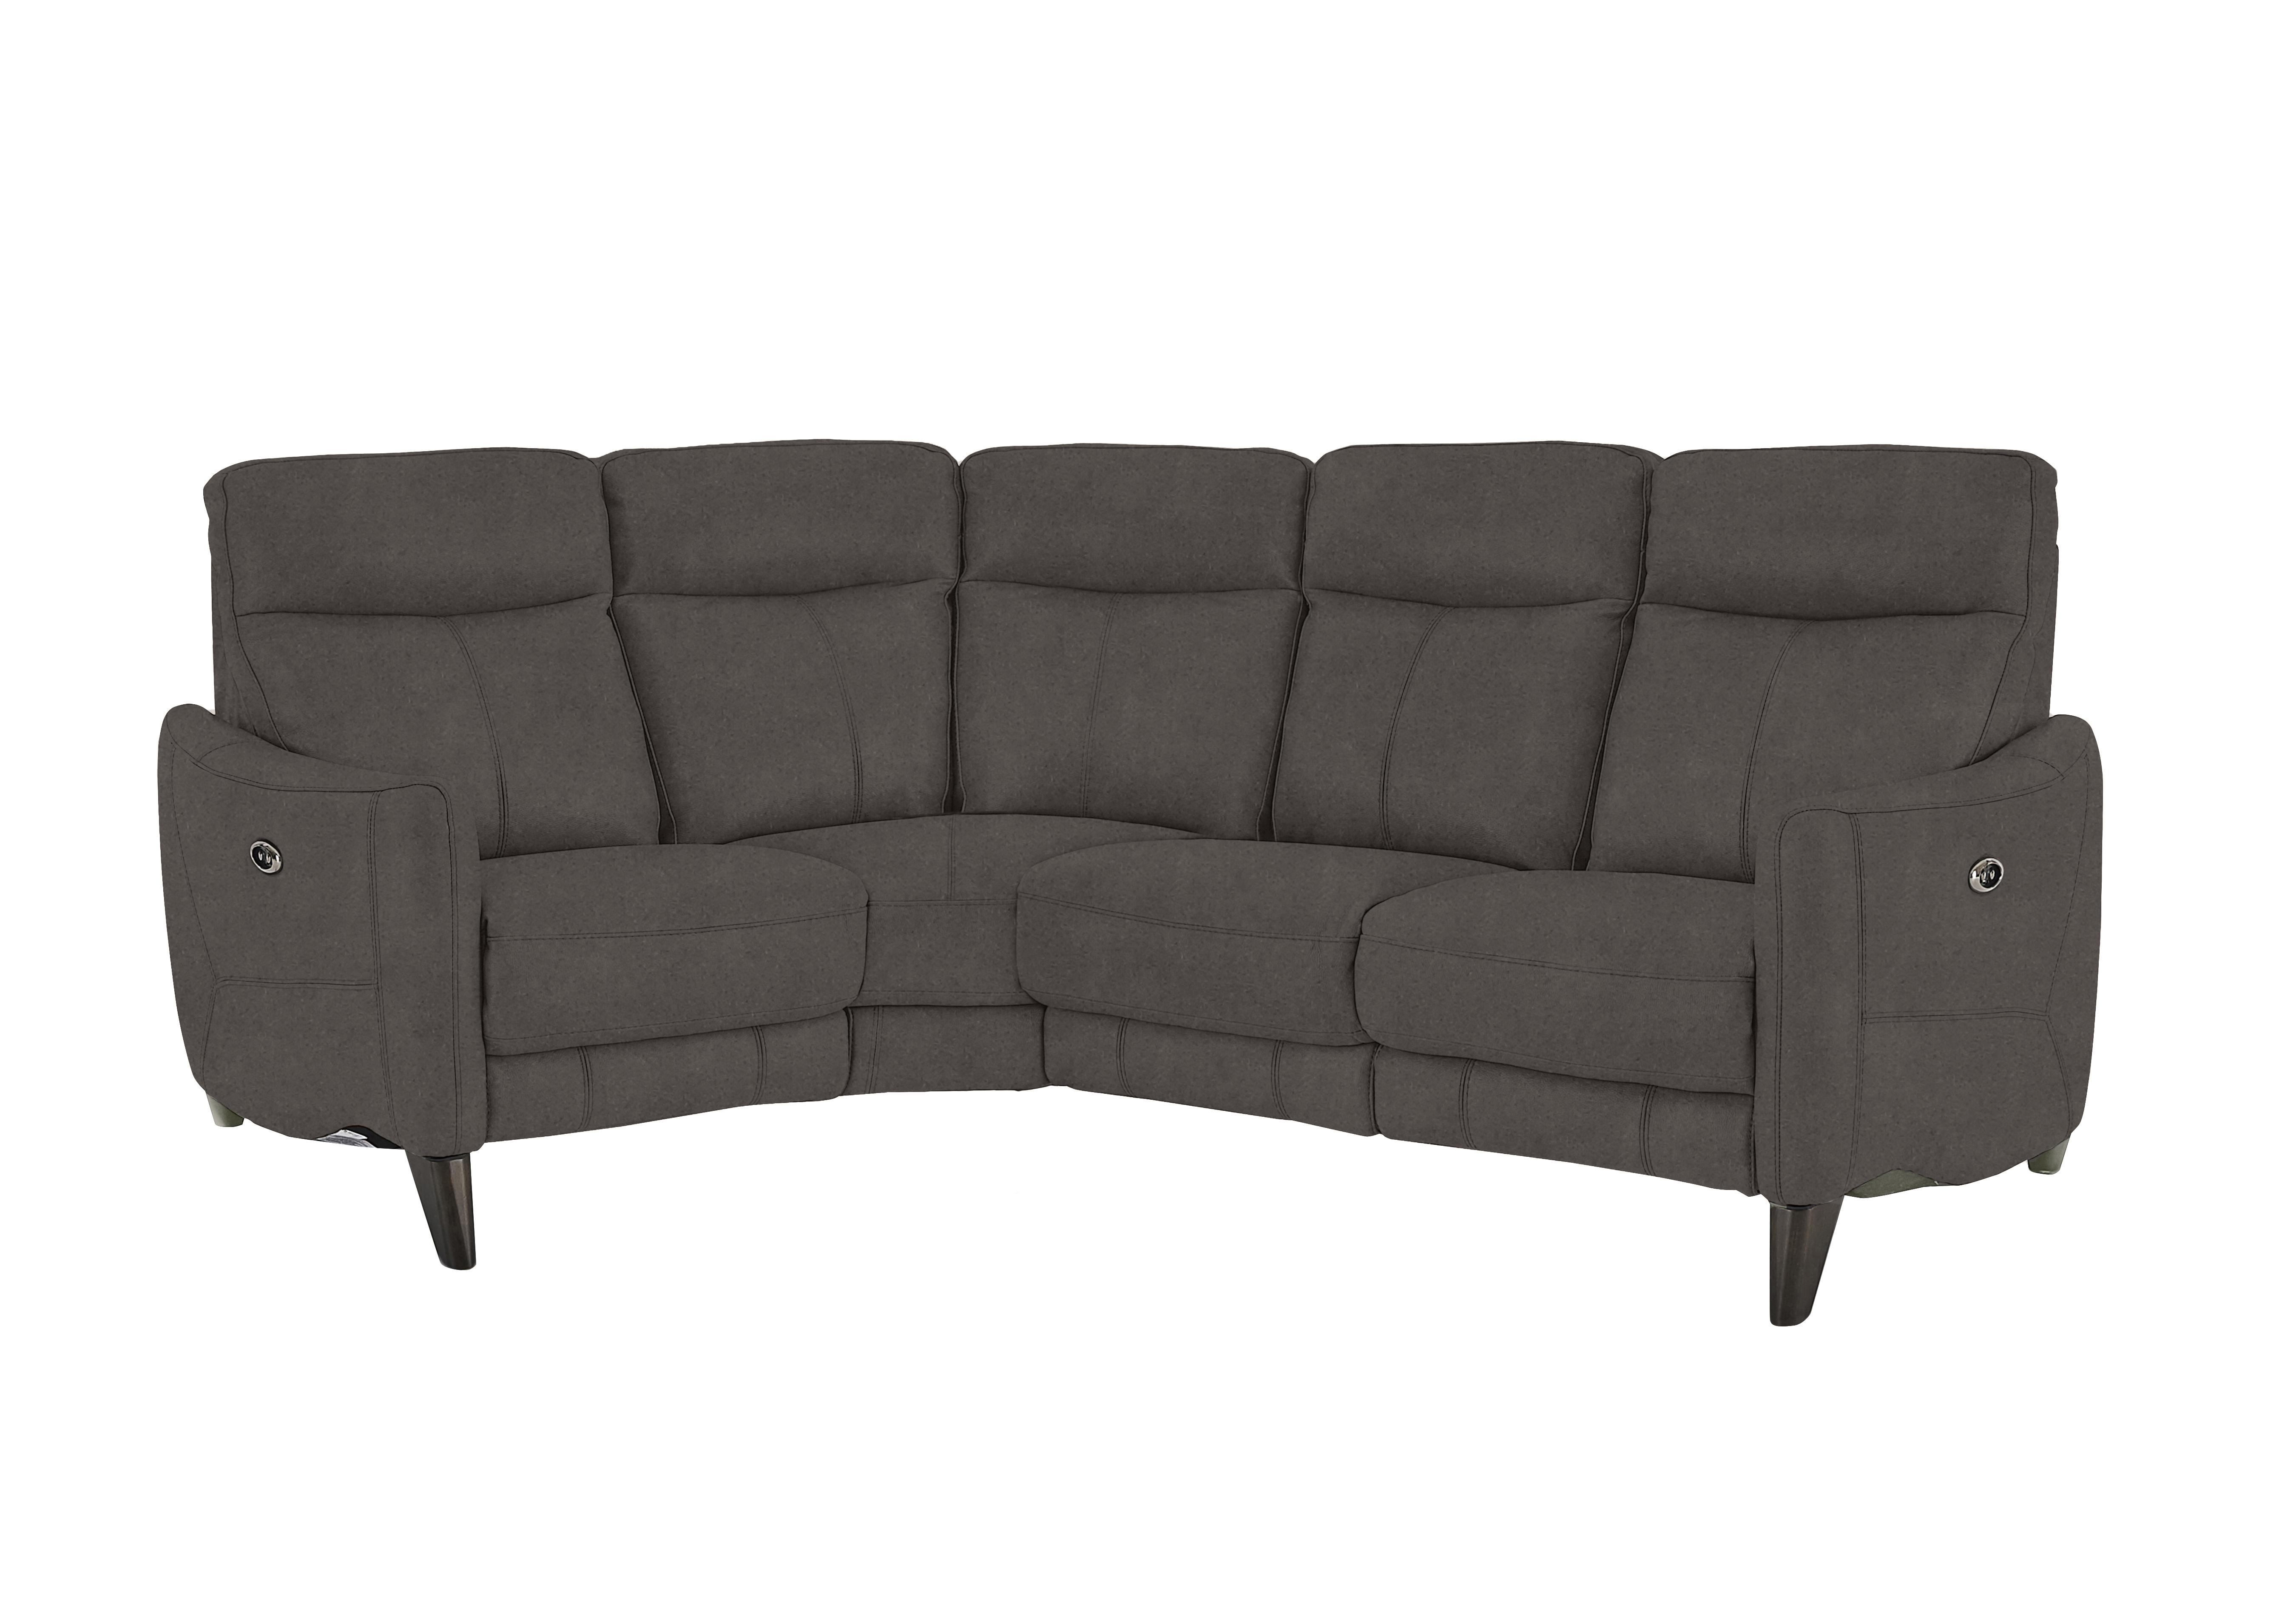 Compact Collection Petit Fabric Corner Sofa in Bfa-Blj-R16 Grey on Furniture Village